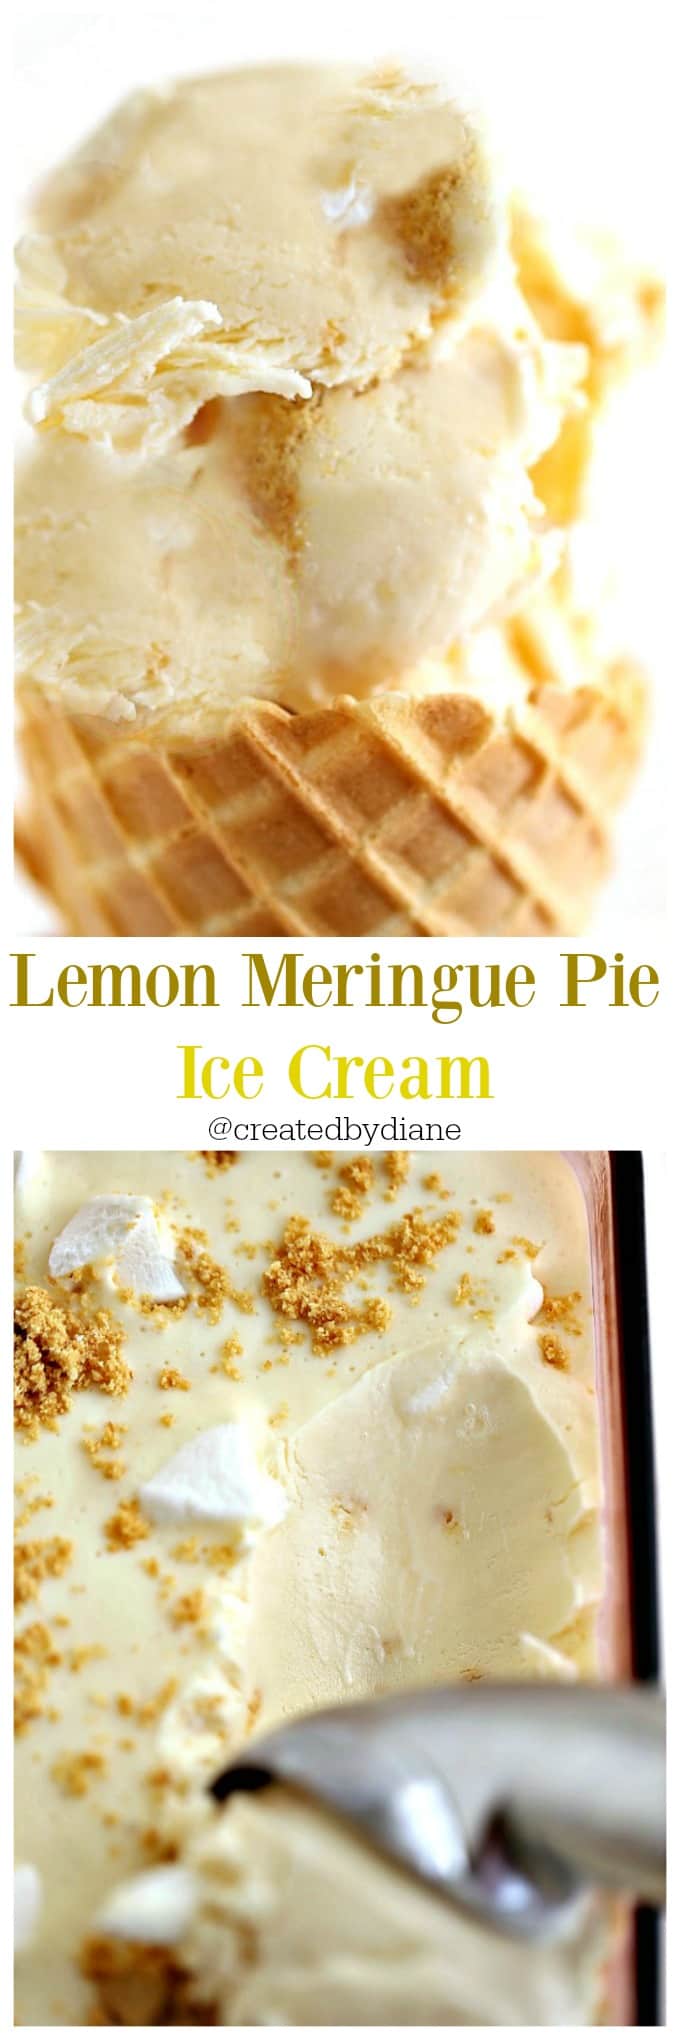 lemon meringue pie ice cream no churn, easy 5 minutes to mkae